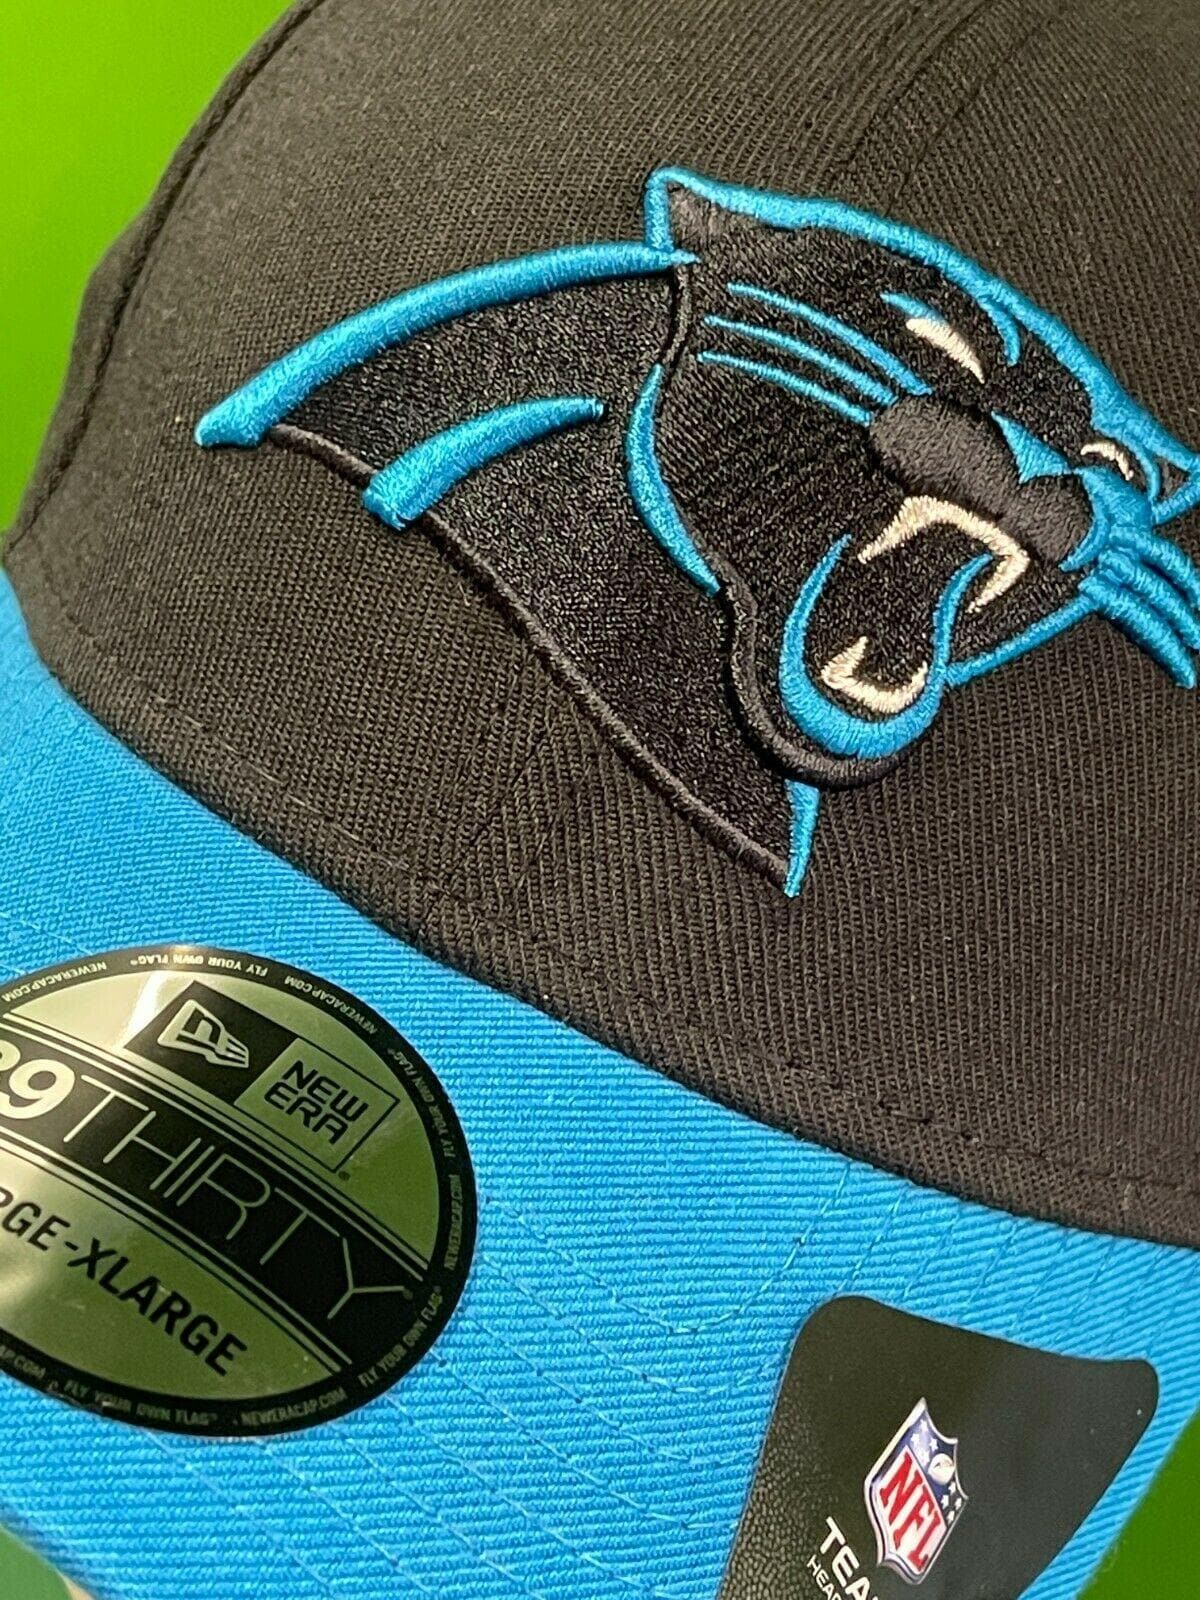 NFL Carolina Panthers New Era 39THIRTY Team Classics Cap Hat L-XL NWT